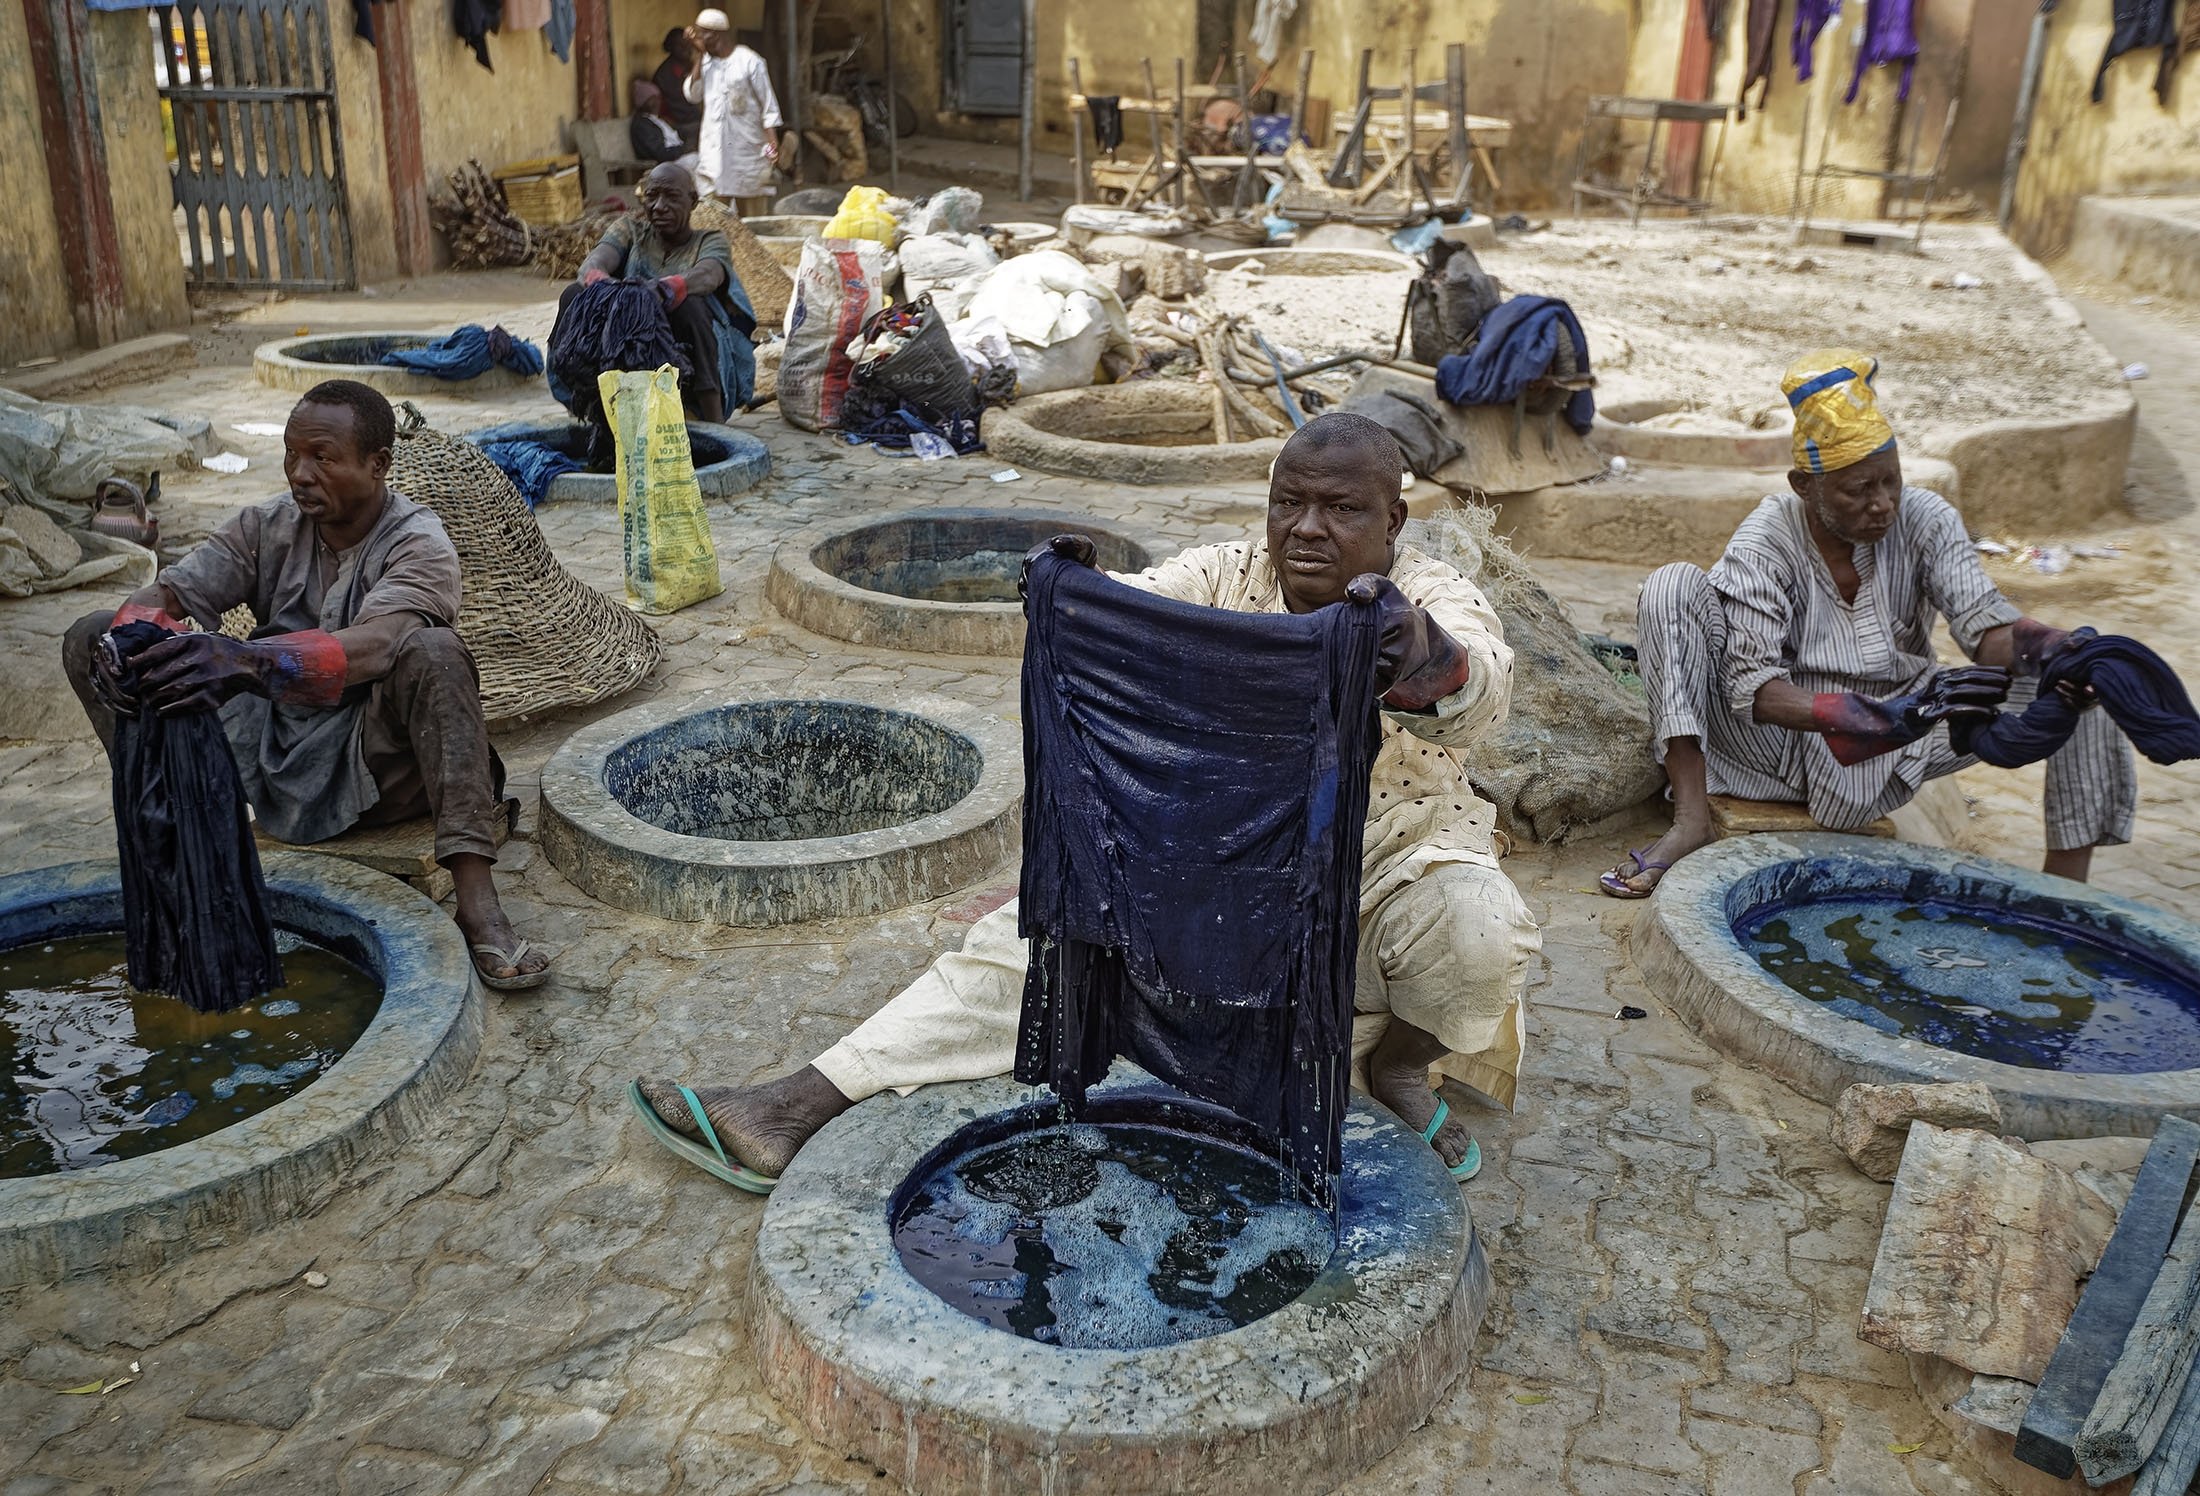 Indigo, ash and time mark Nigeria's centuries-old dye pits